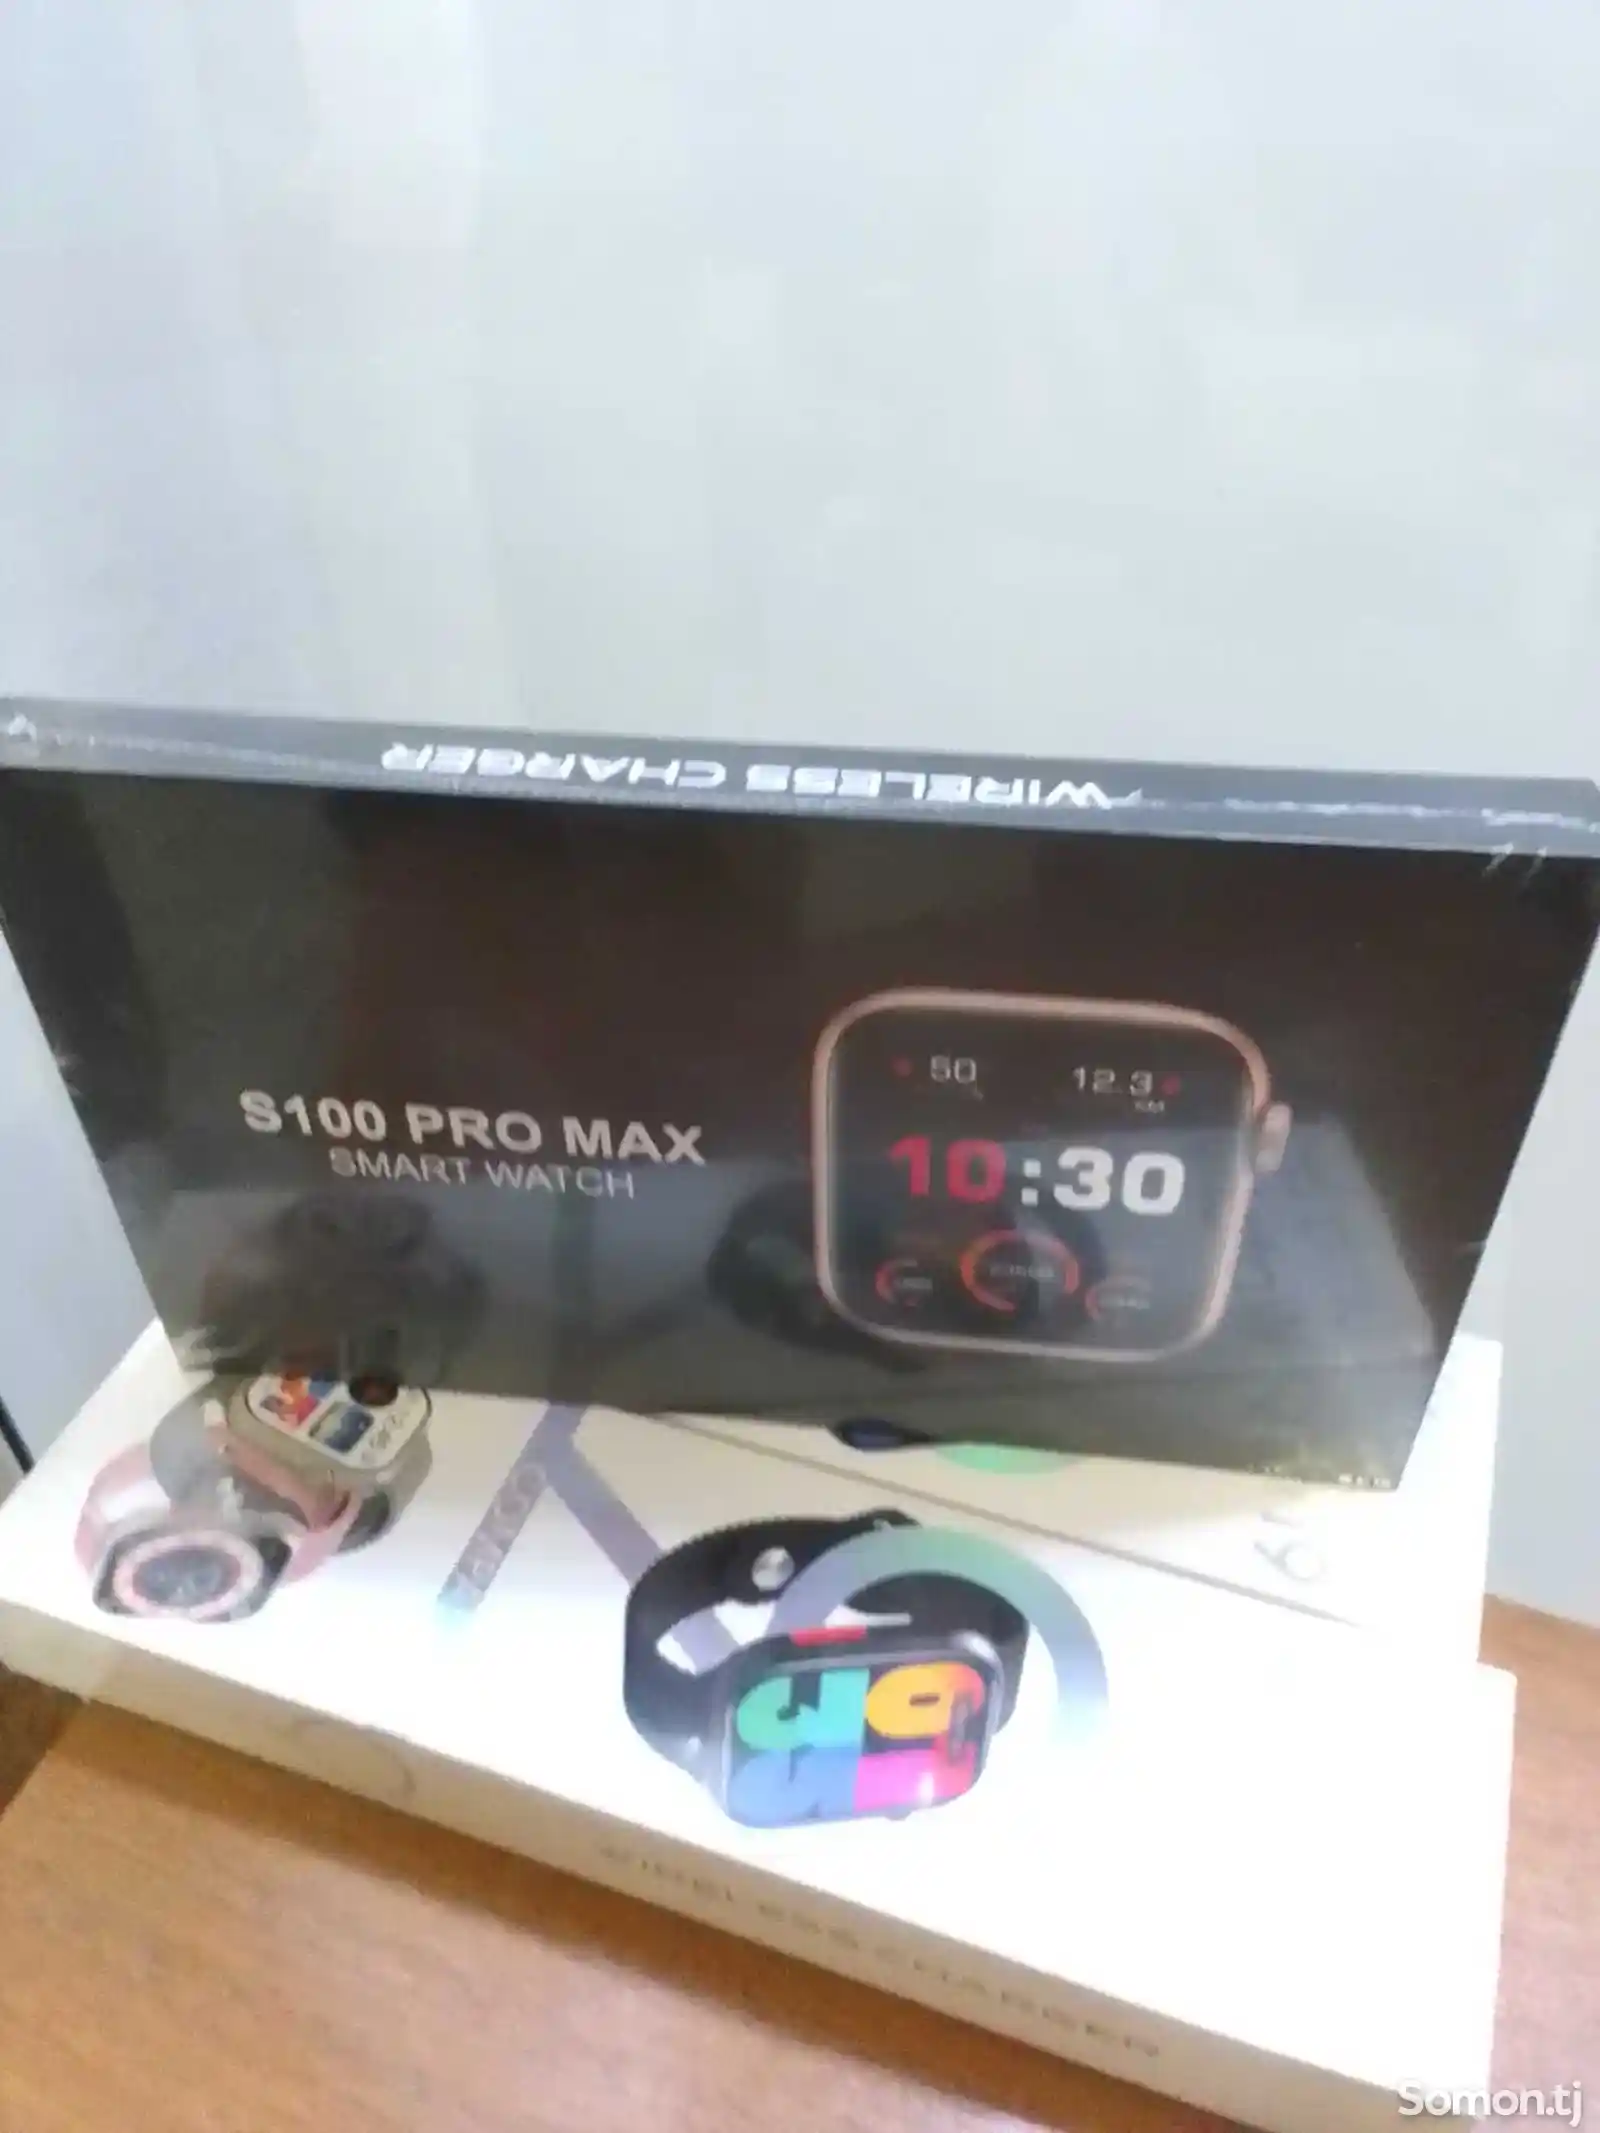 Смарт часы S100 Pro max-3